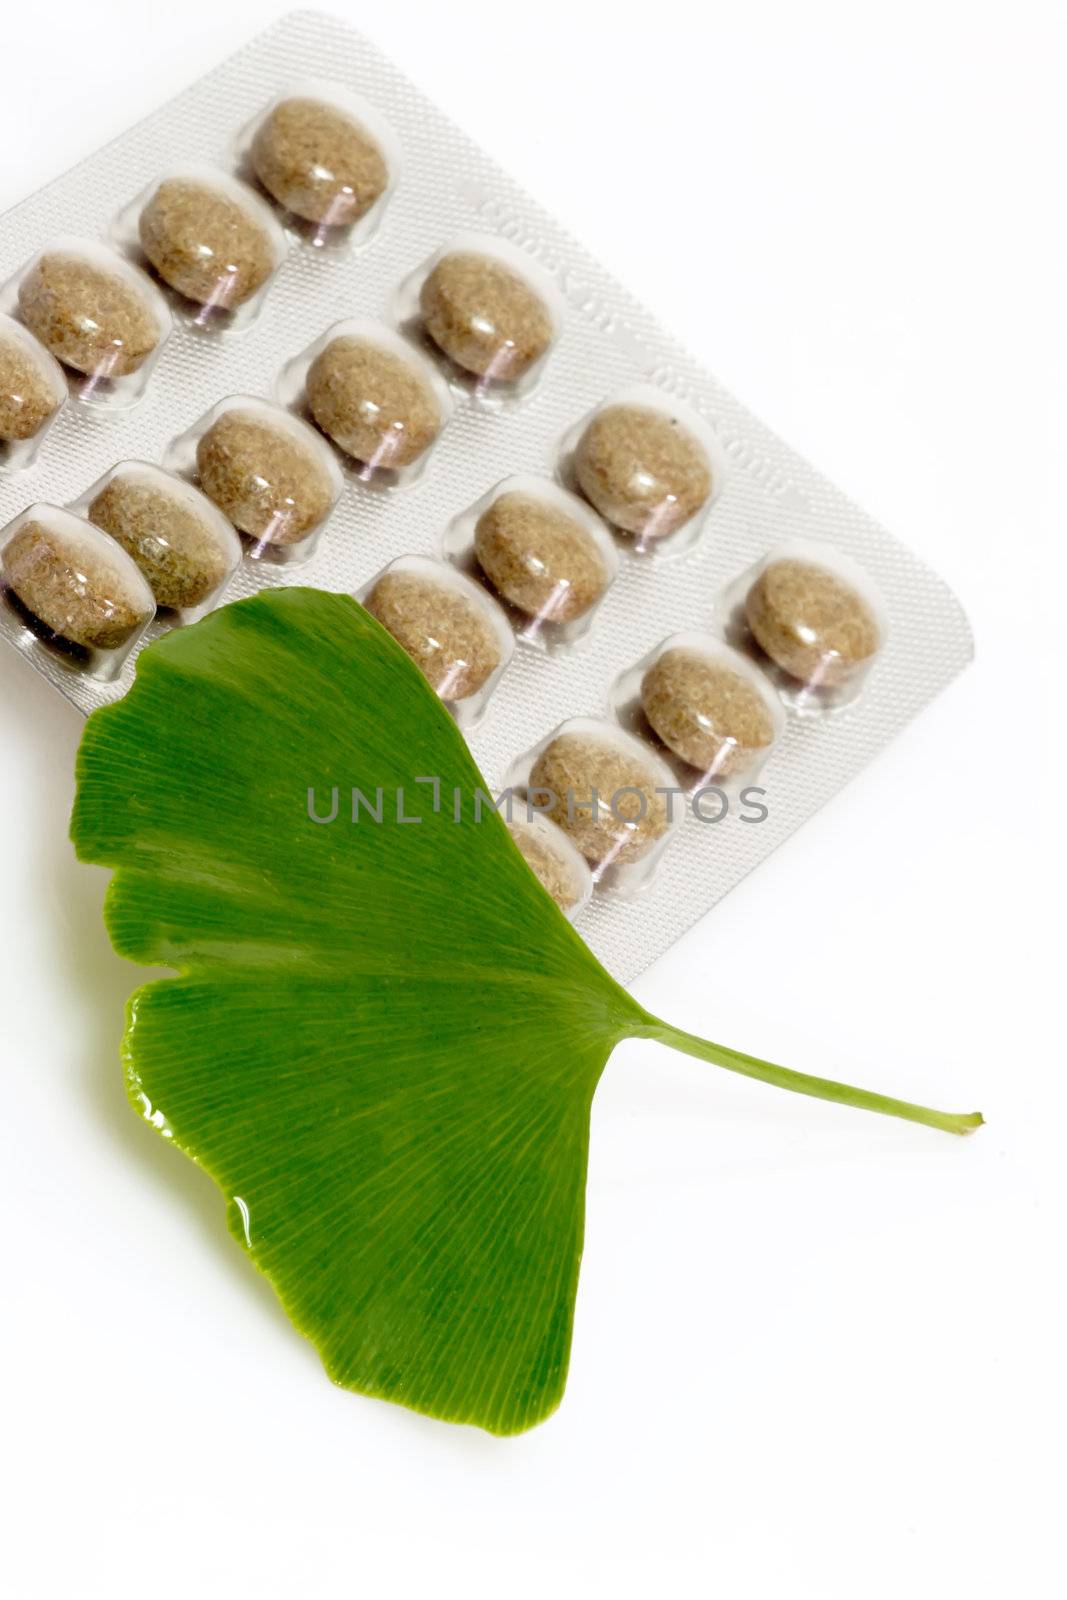 Ginkgo biloba leaf with pills on bright background. 